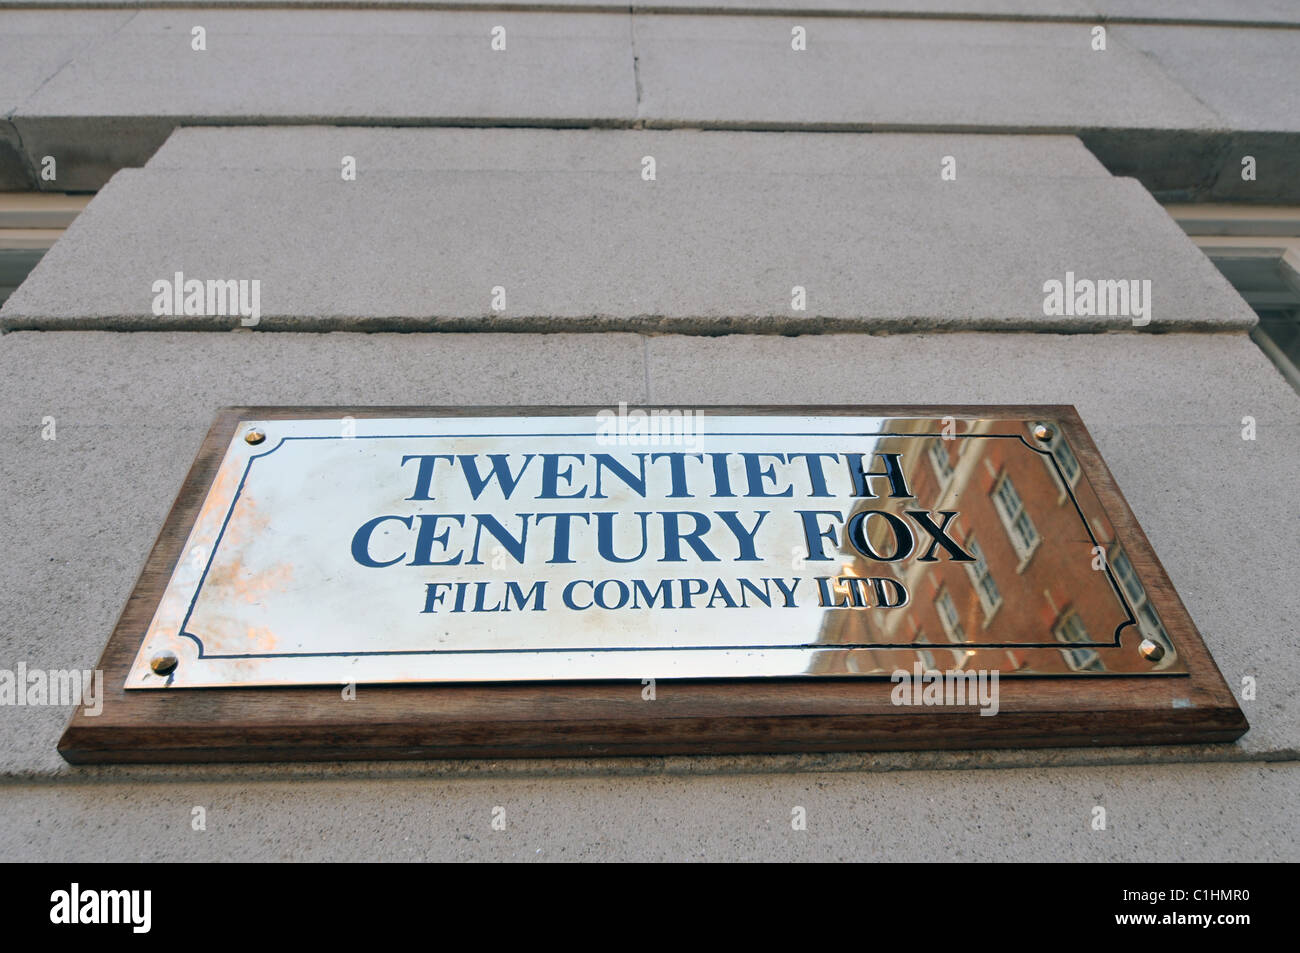 Twentieth Century Fox Film Company Ltd London Office 20th Century Fox Stock  Photo - Alamy